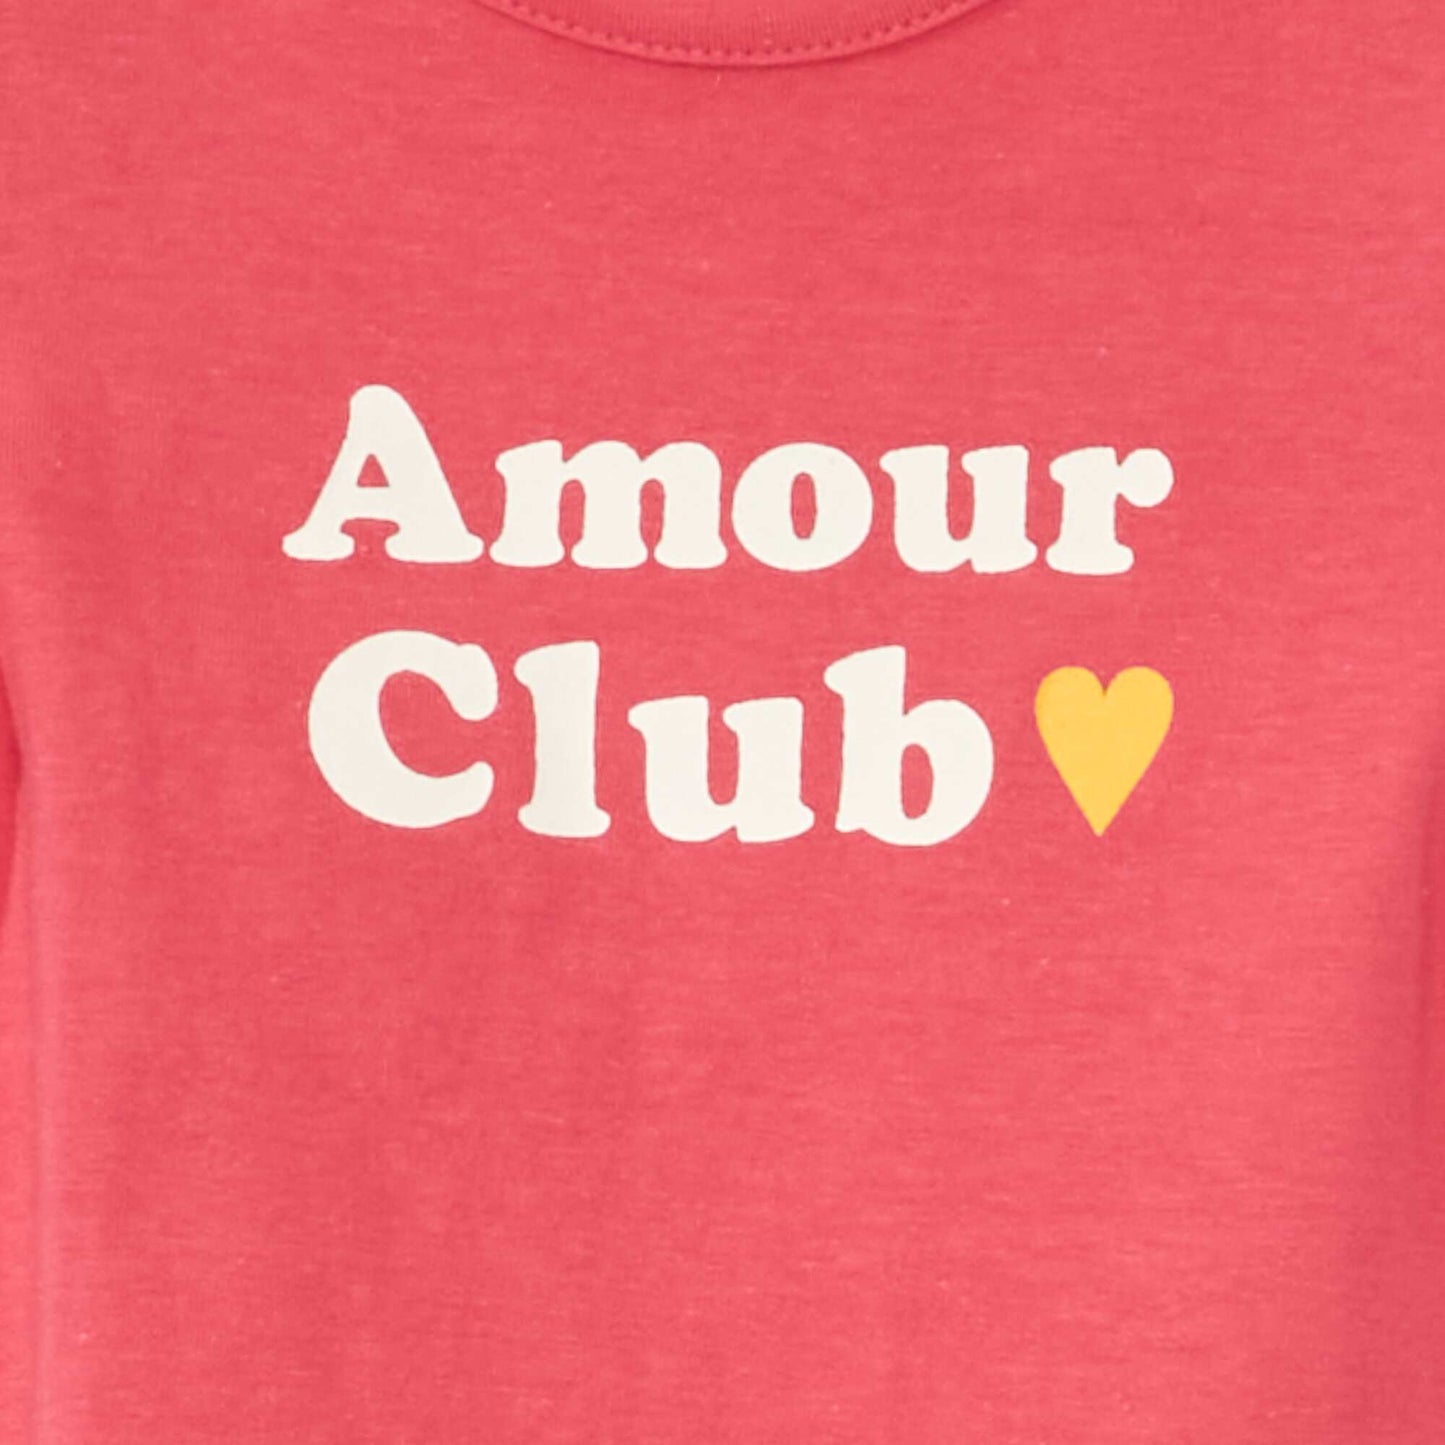 Tee-shirt à message 'amour club' Rose